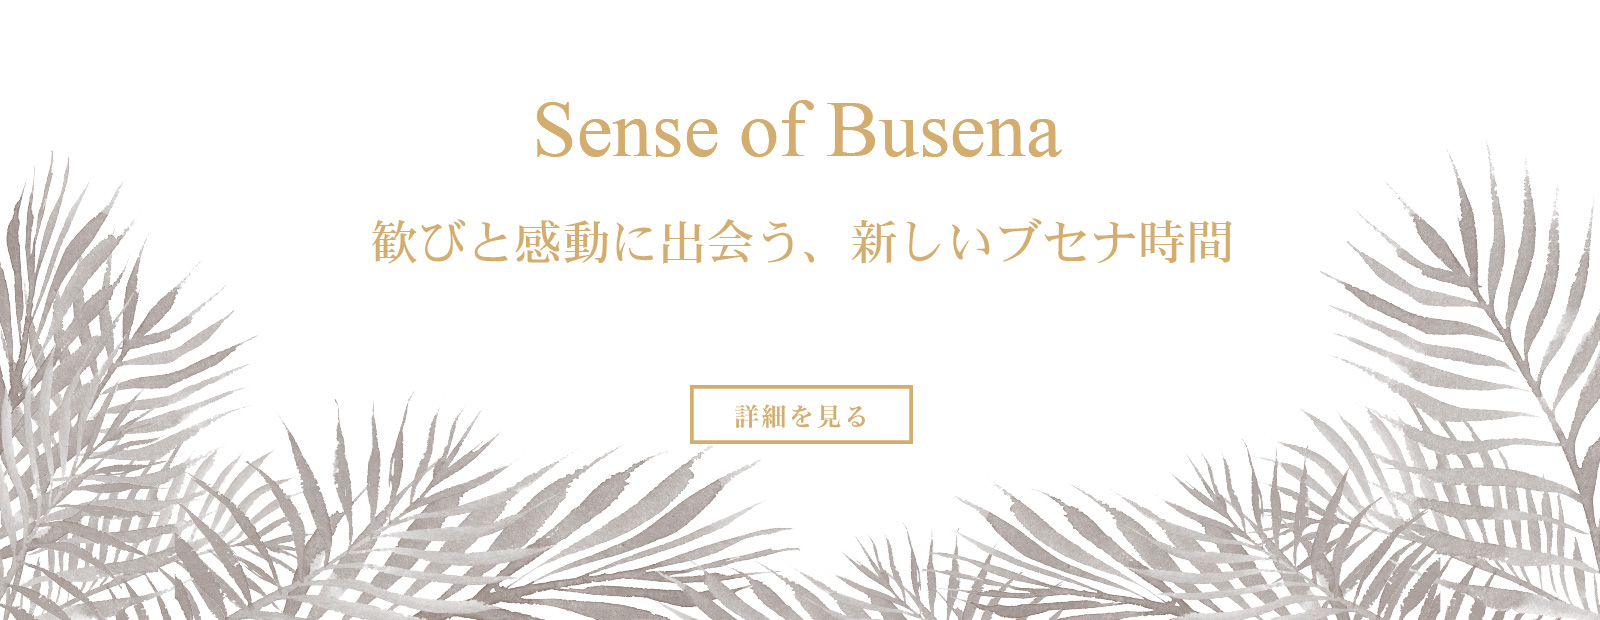 Sense of Busena